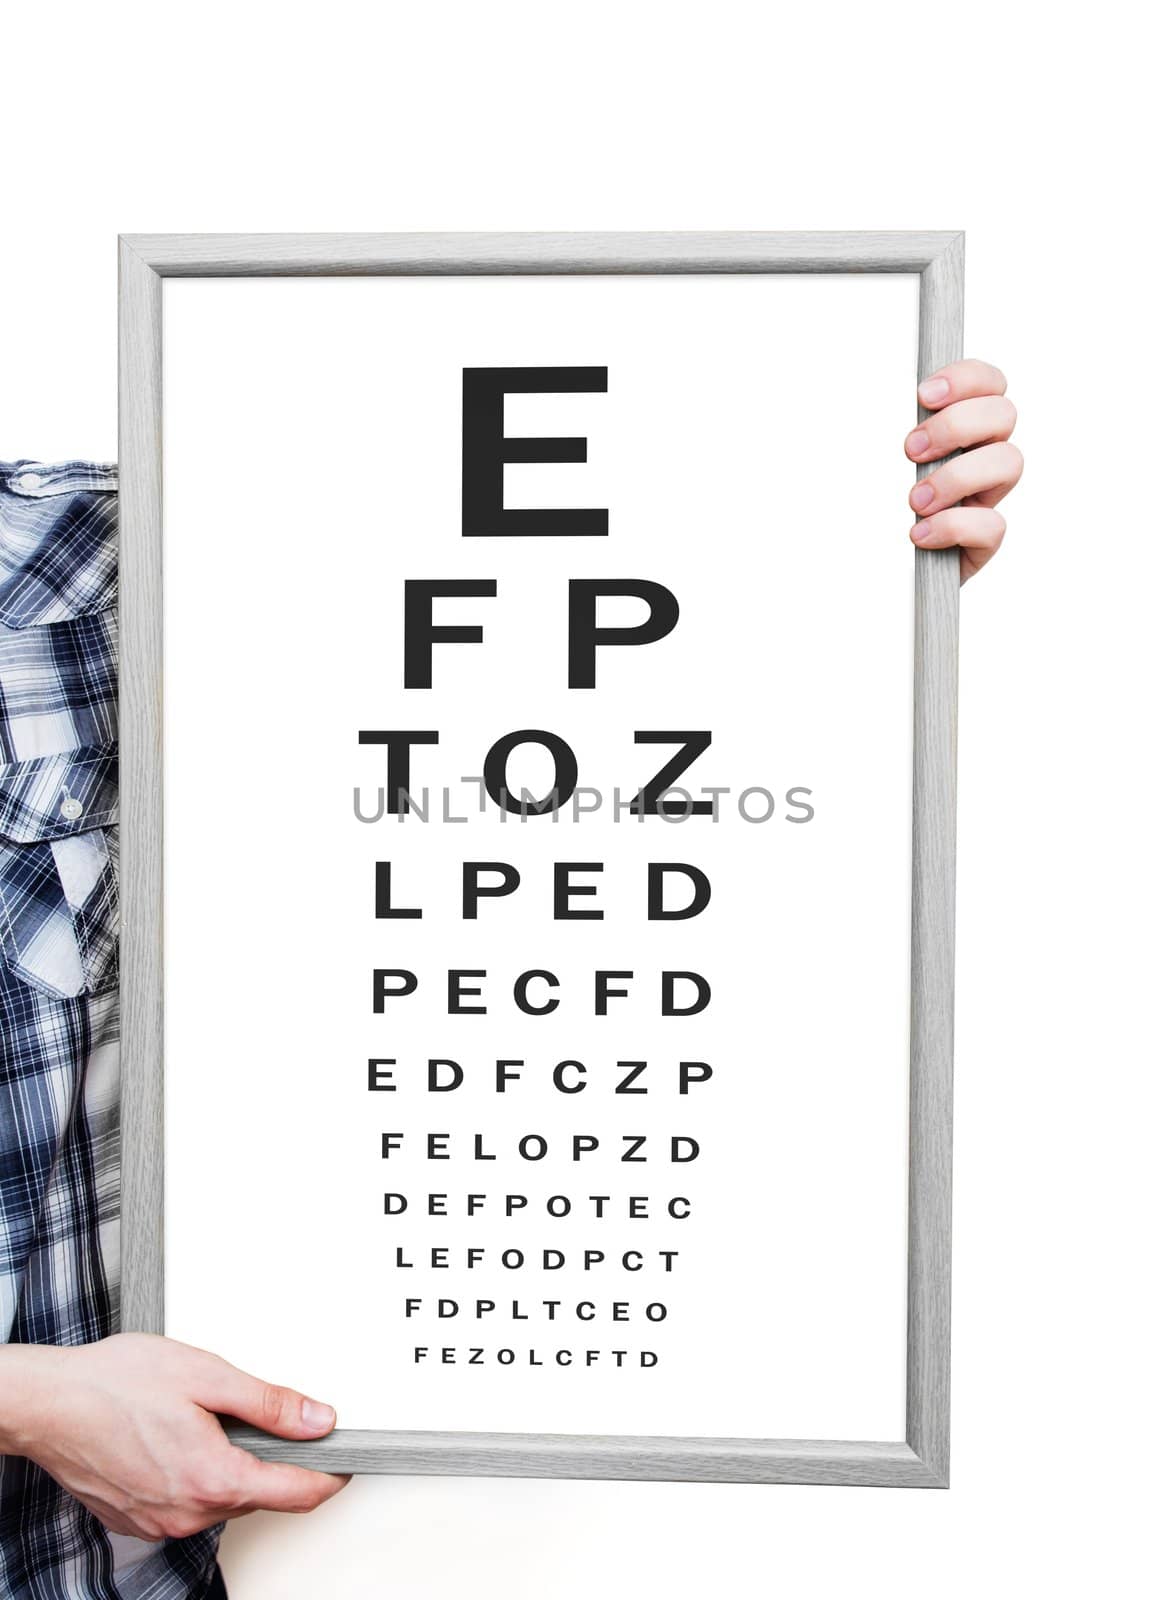 Man showing Snellen eye exam chart on white background